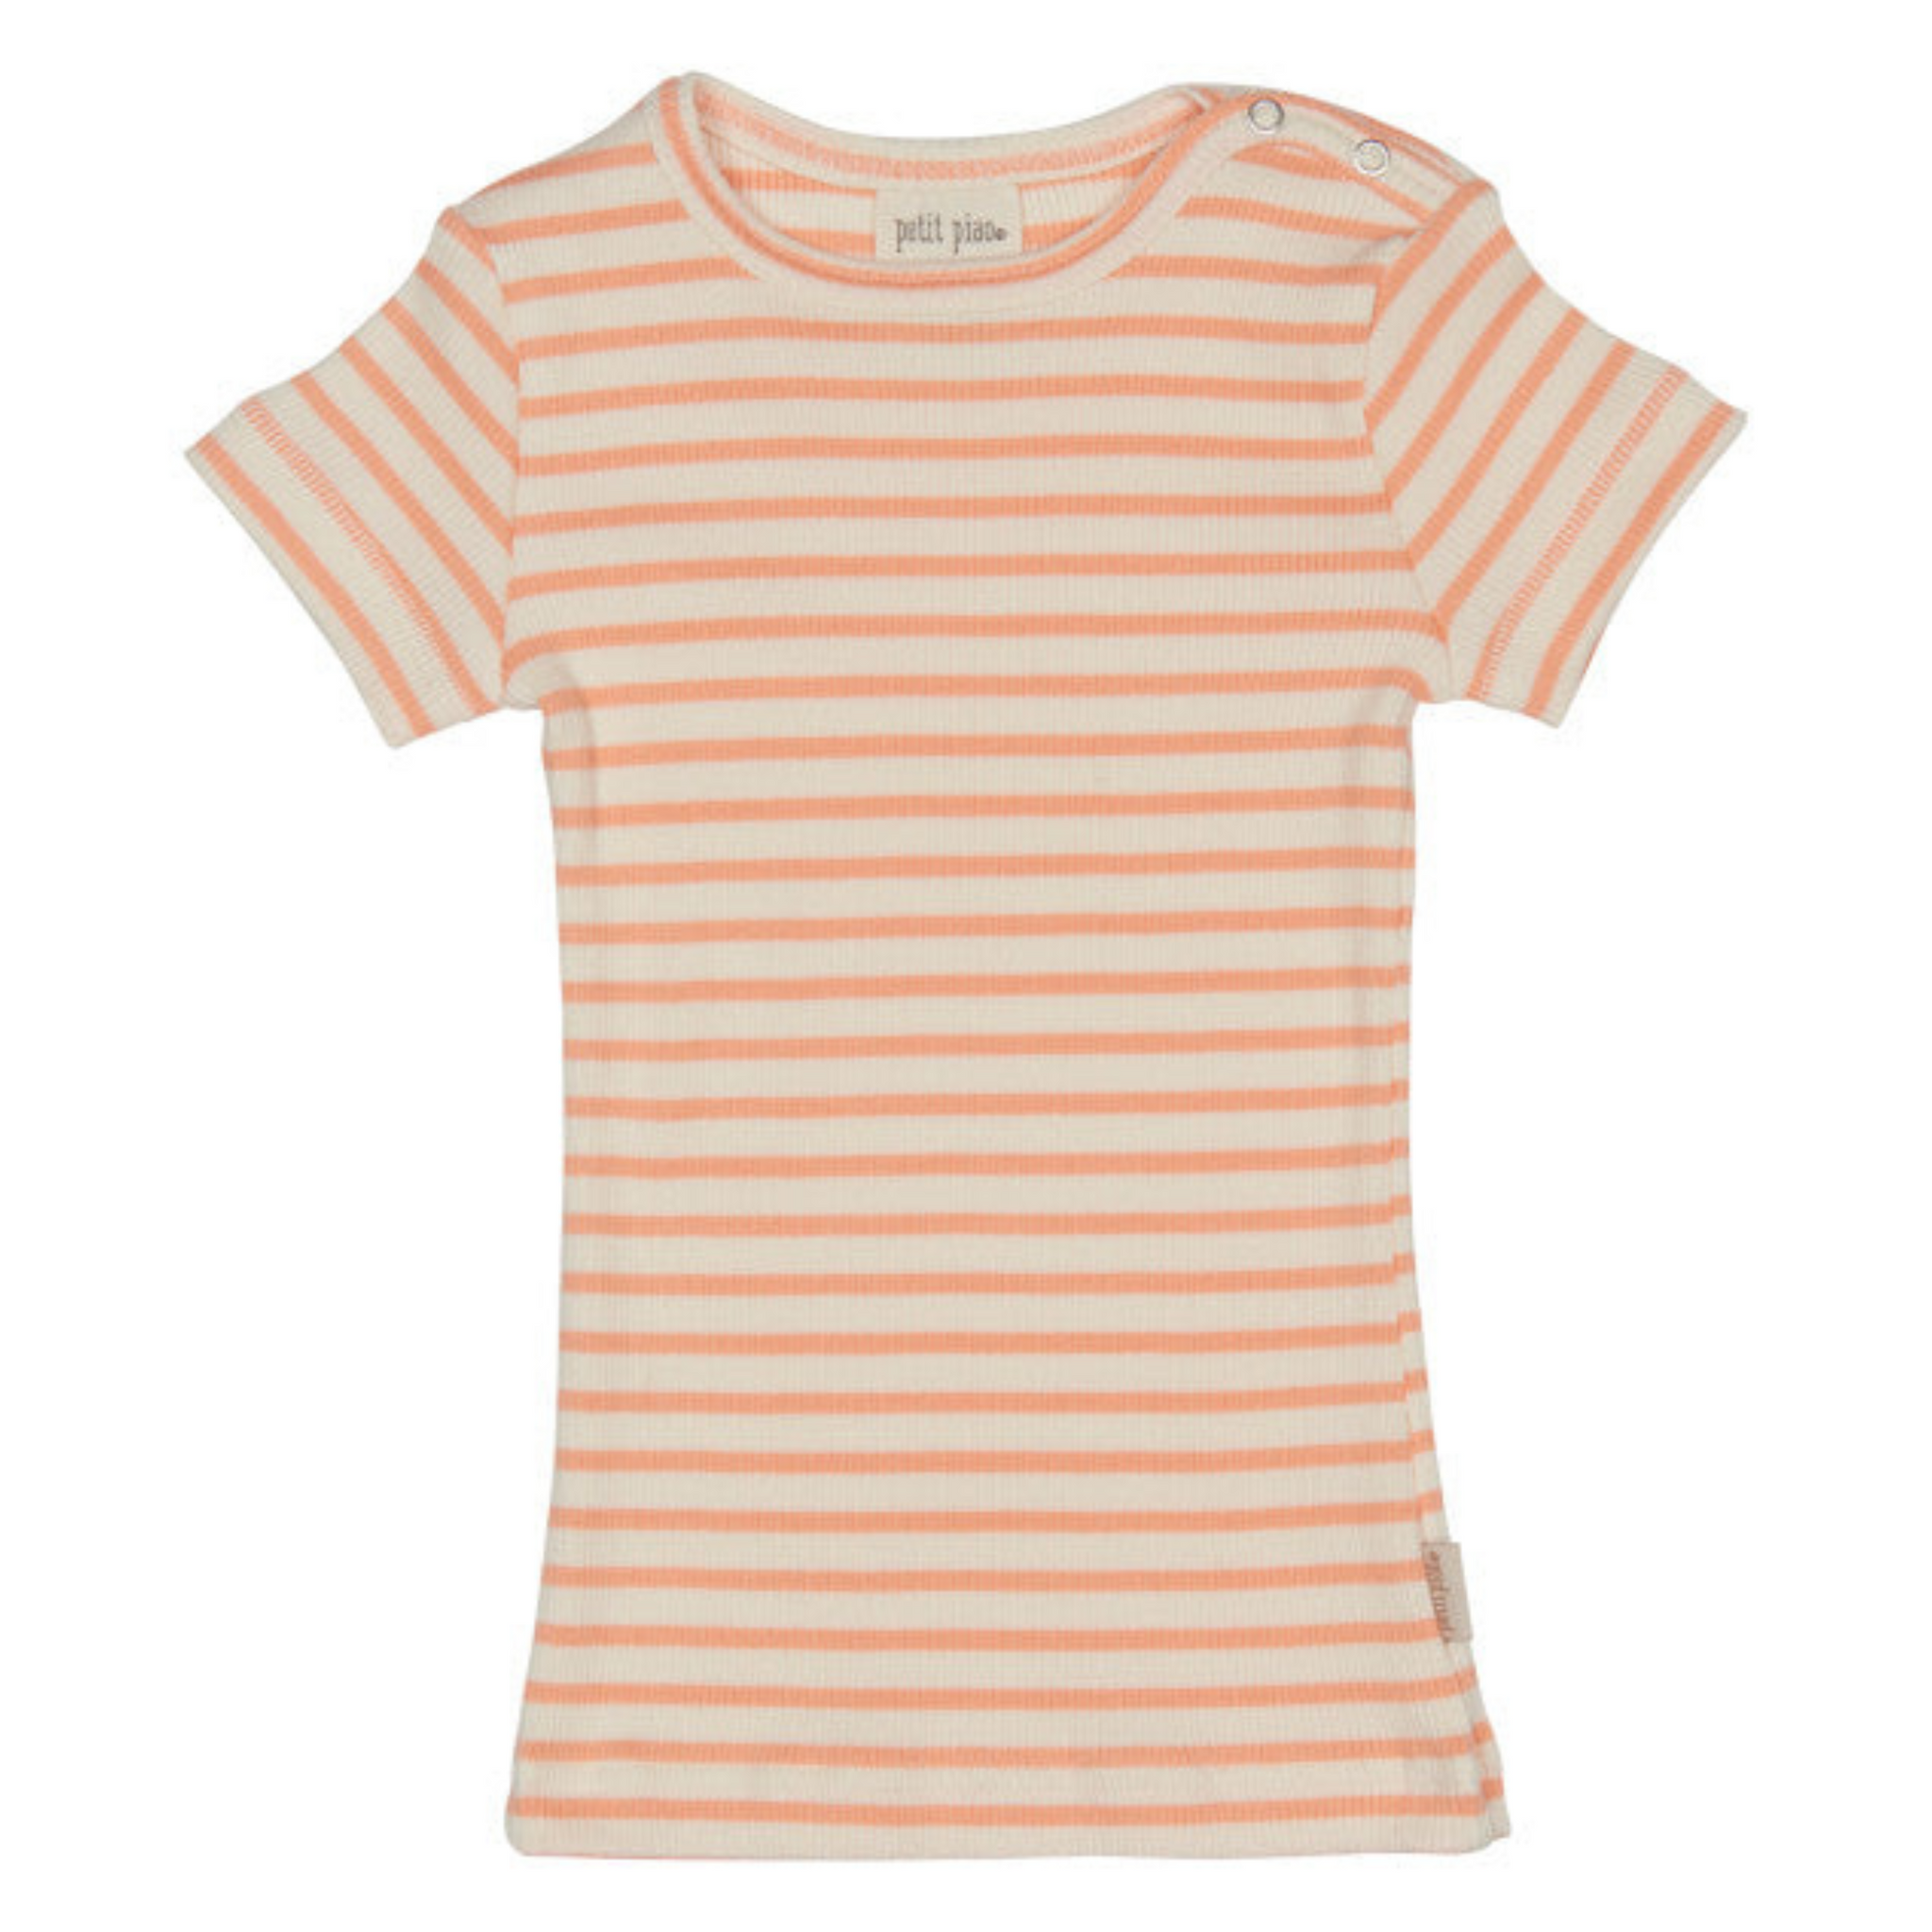 Petit Piao - Modal Striped T-shirt SS - Peach Naught / Eggnog